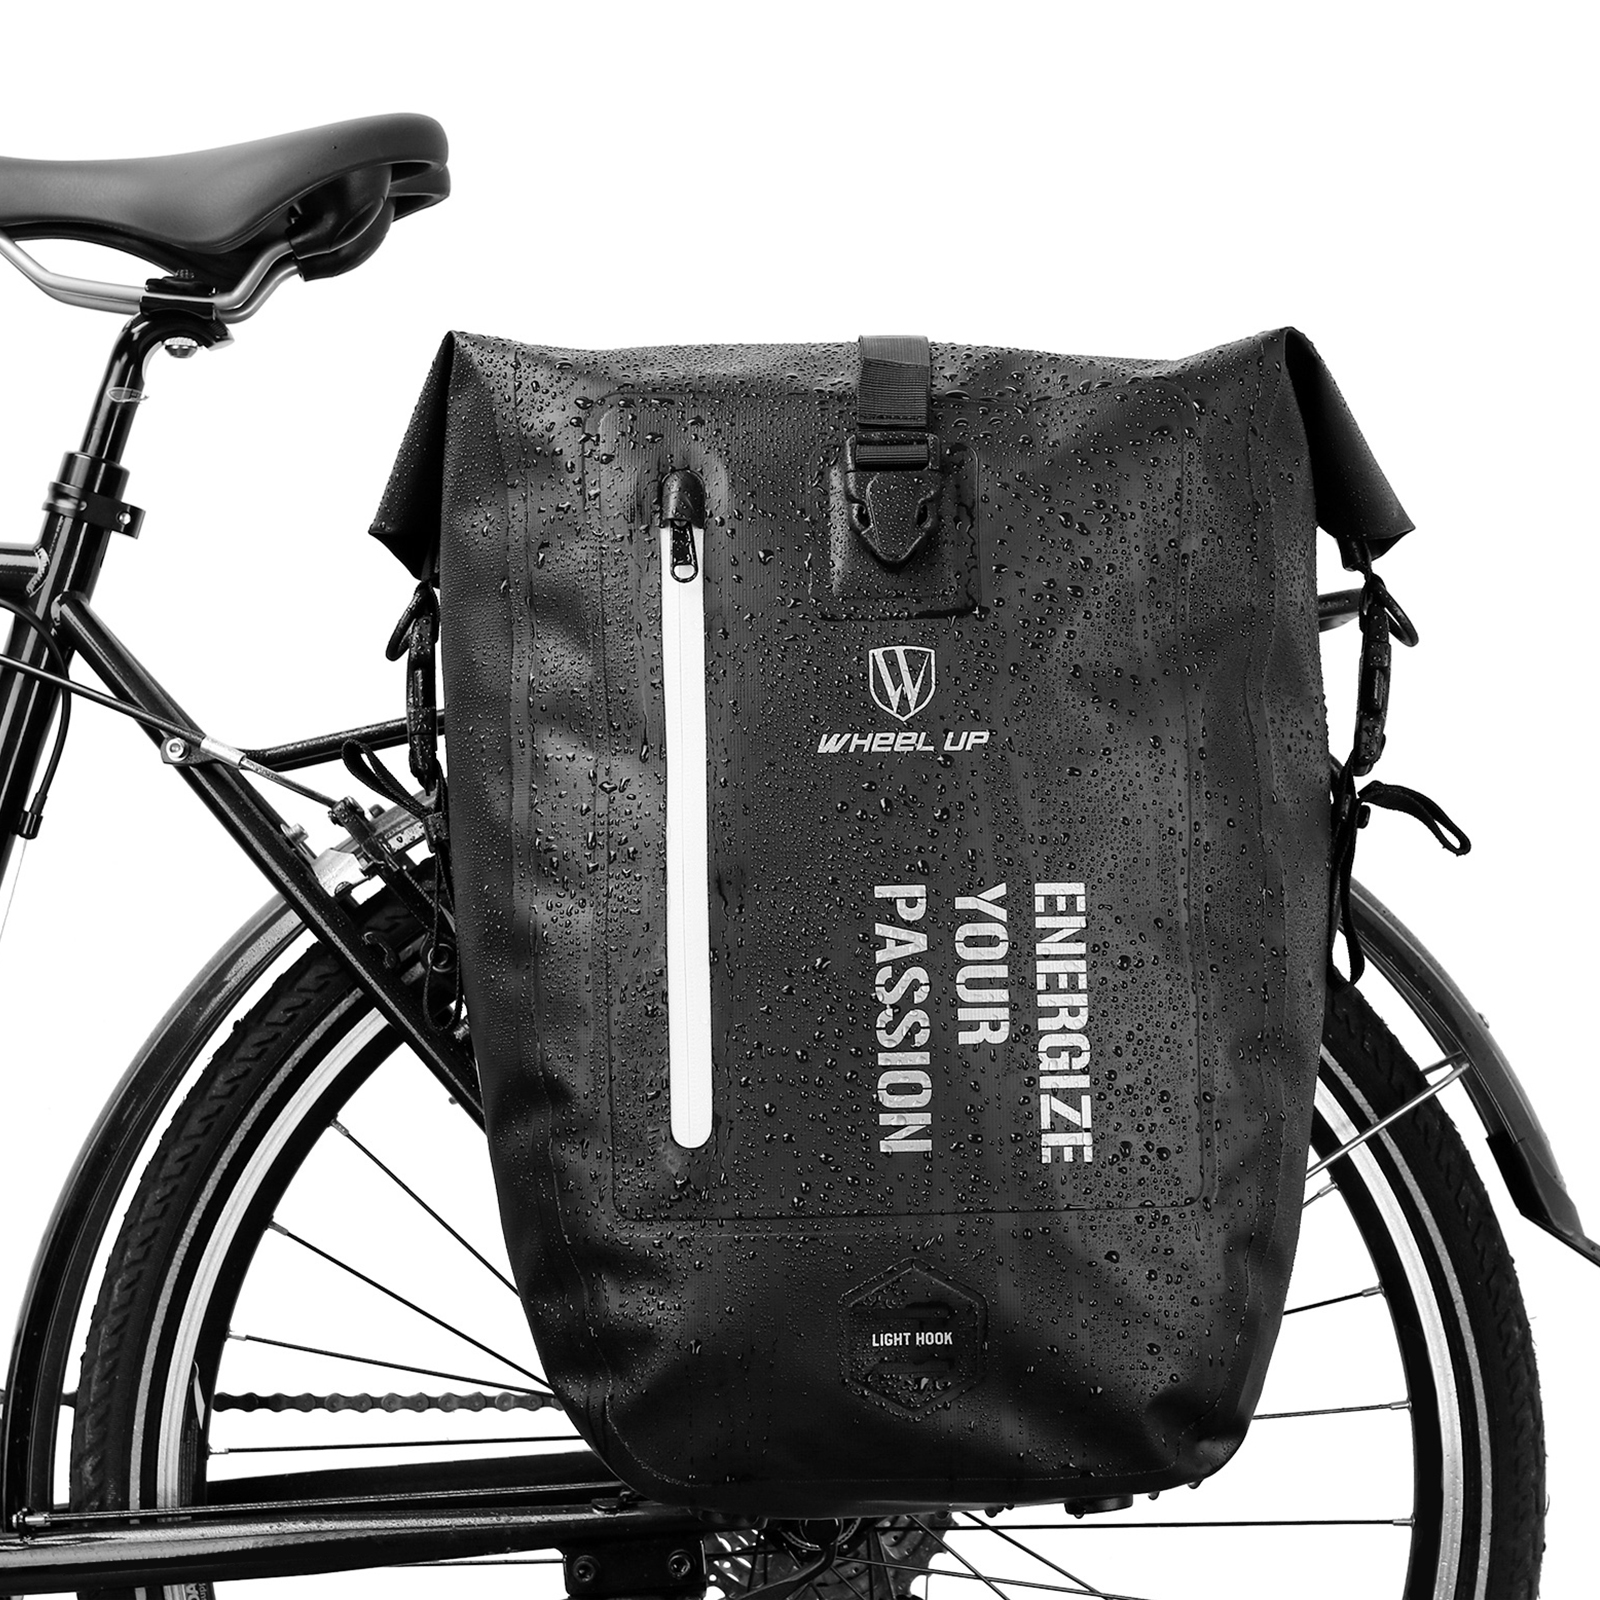 Details about  / Bike Bicycle Seat Rear Bag Waterproof Cycling Pannier Saddle Rack Handbag Pouch